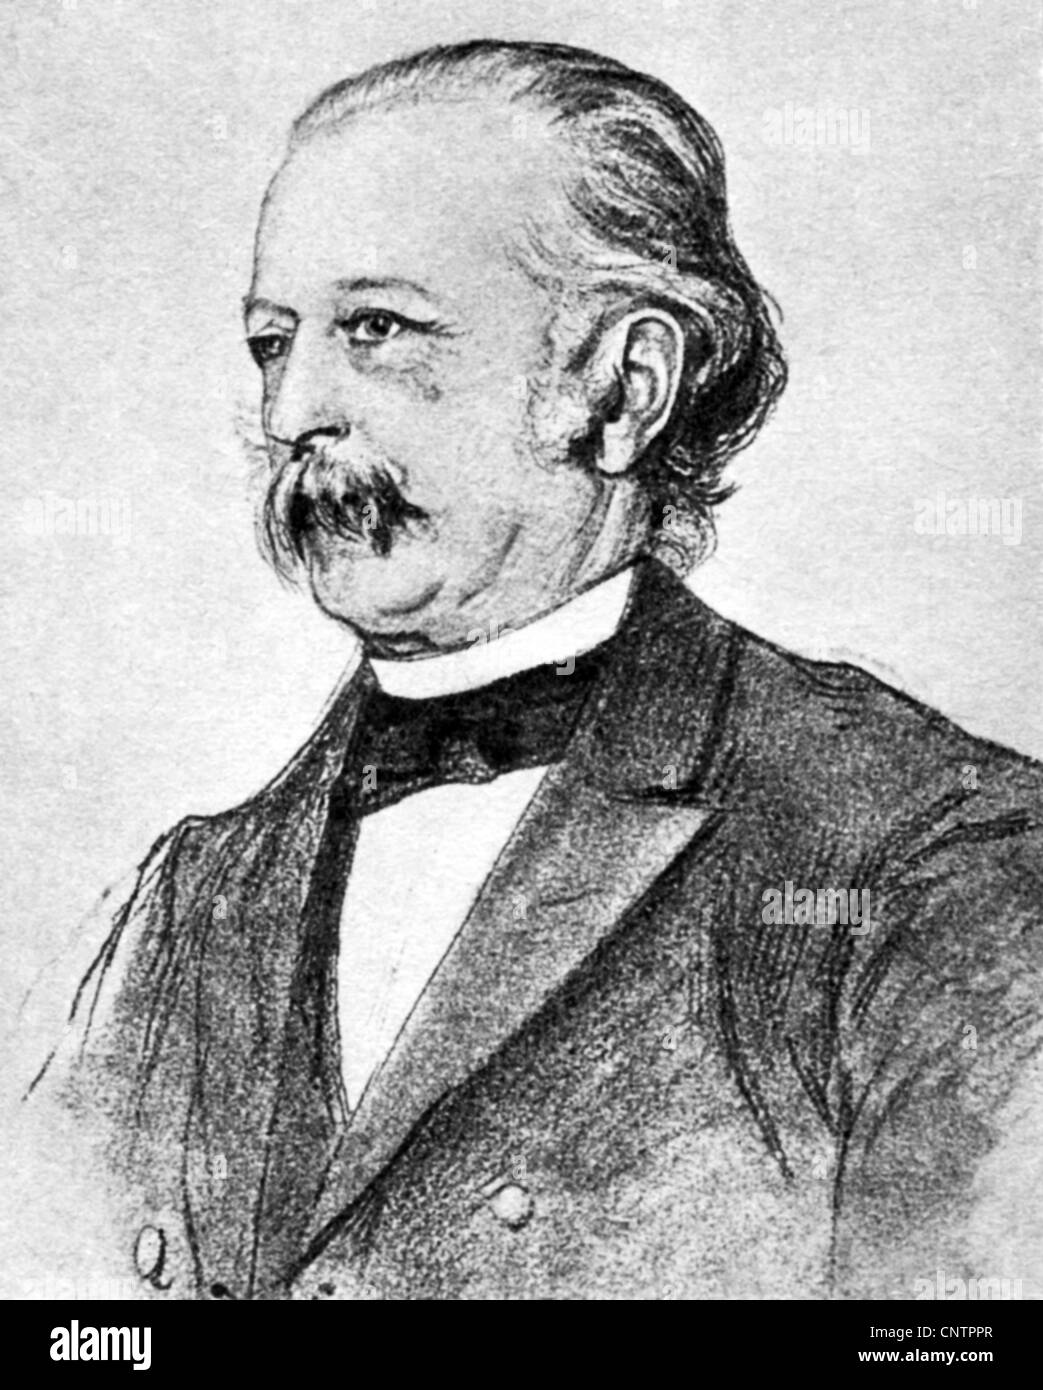 Fontane, Theodor, 30.12.1819 - 20.9.1898, German author / writer, portrait, drawing by Ismael Gentz, Stock Photo